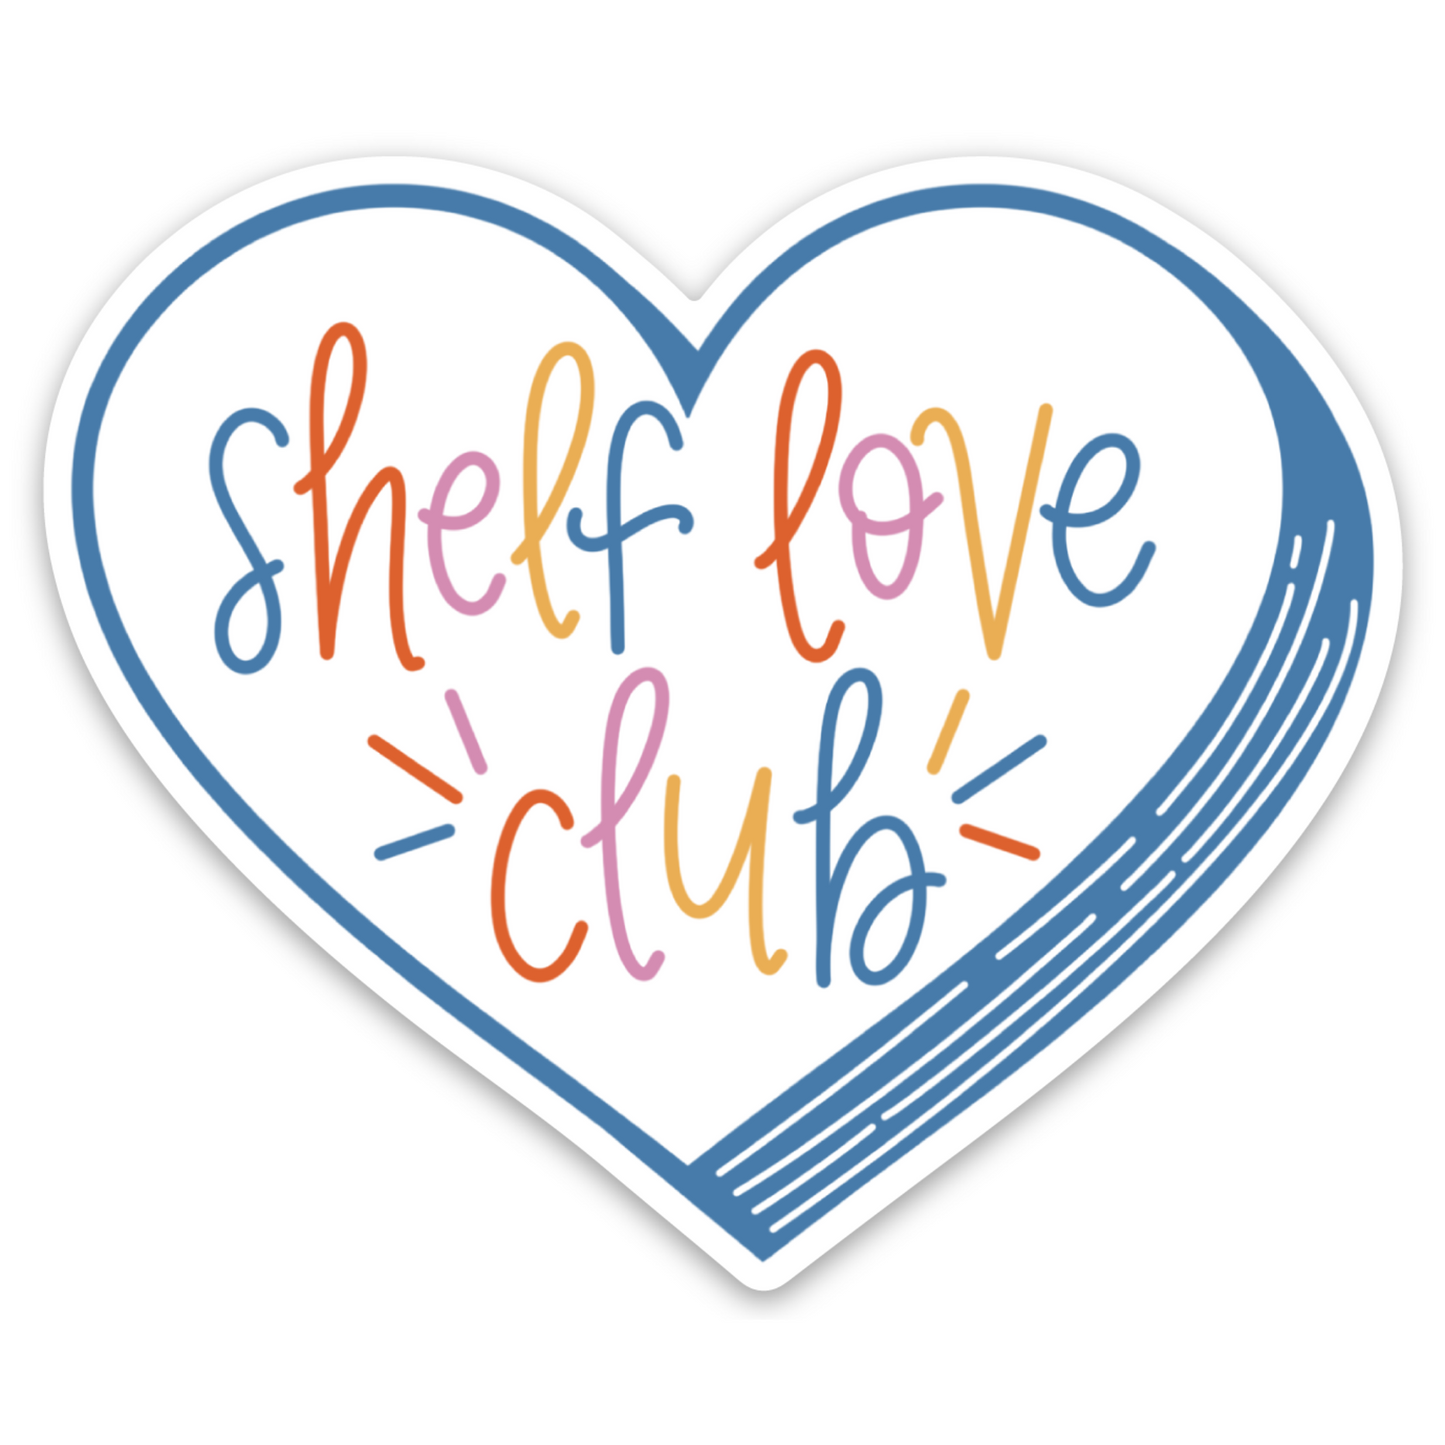 Shelf Love Club Magnet